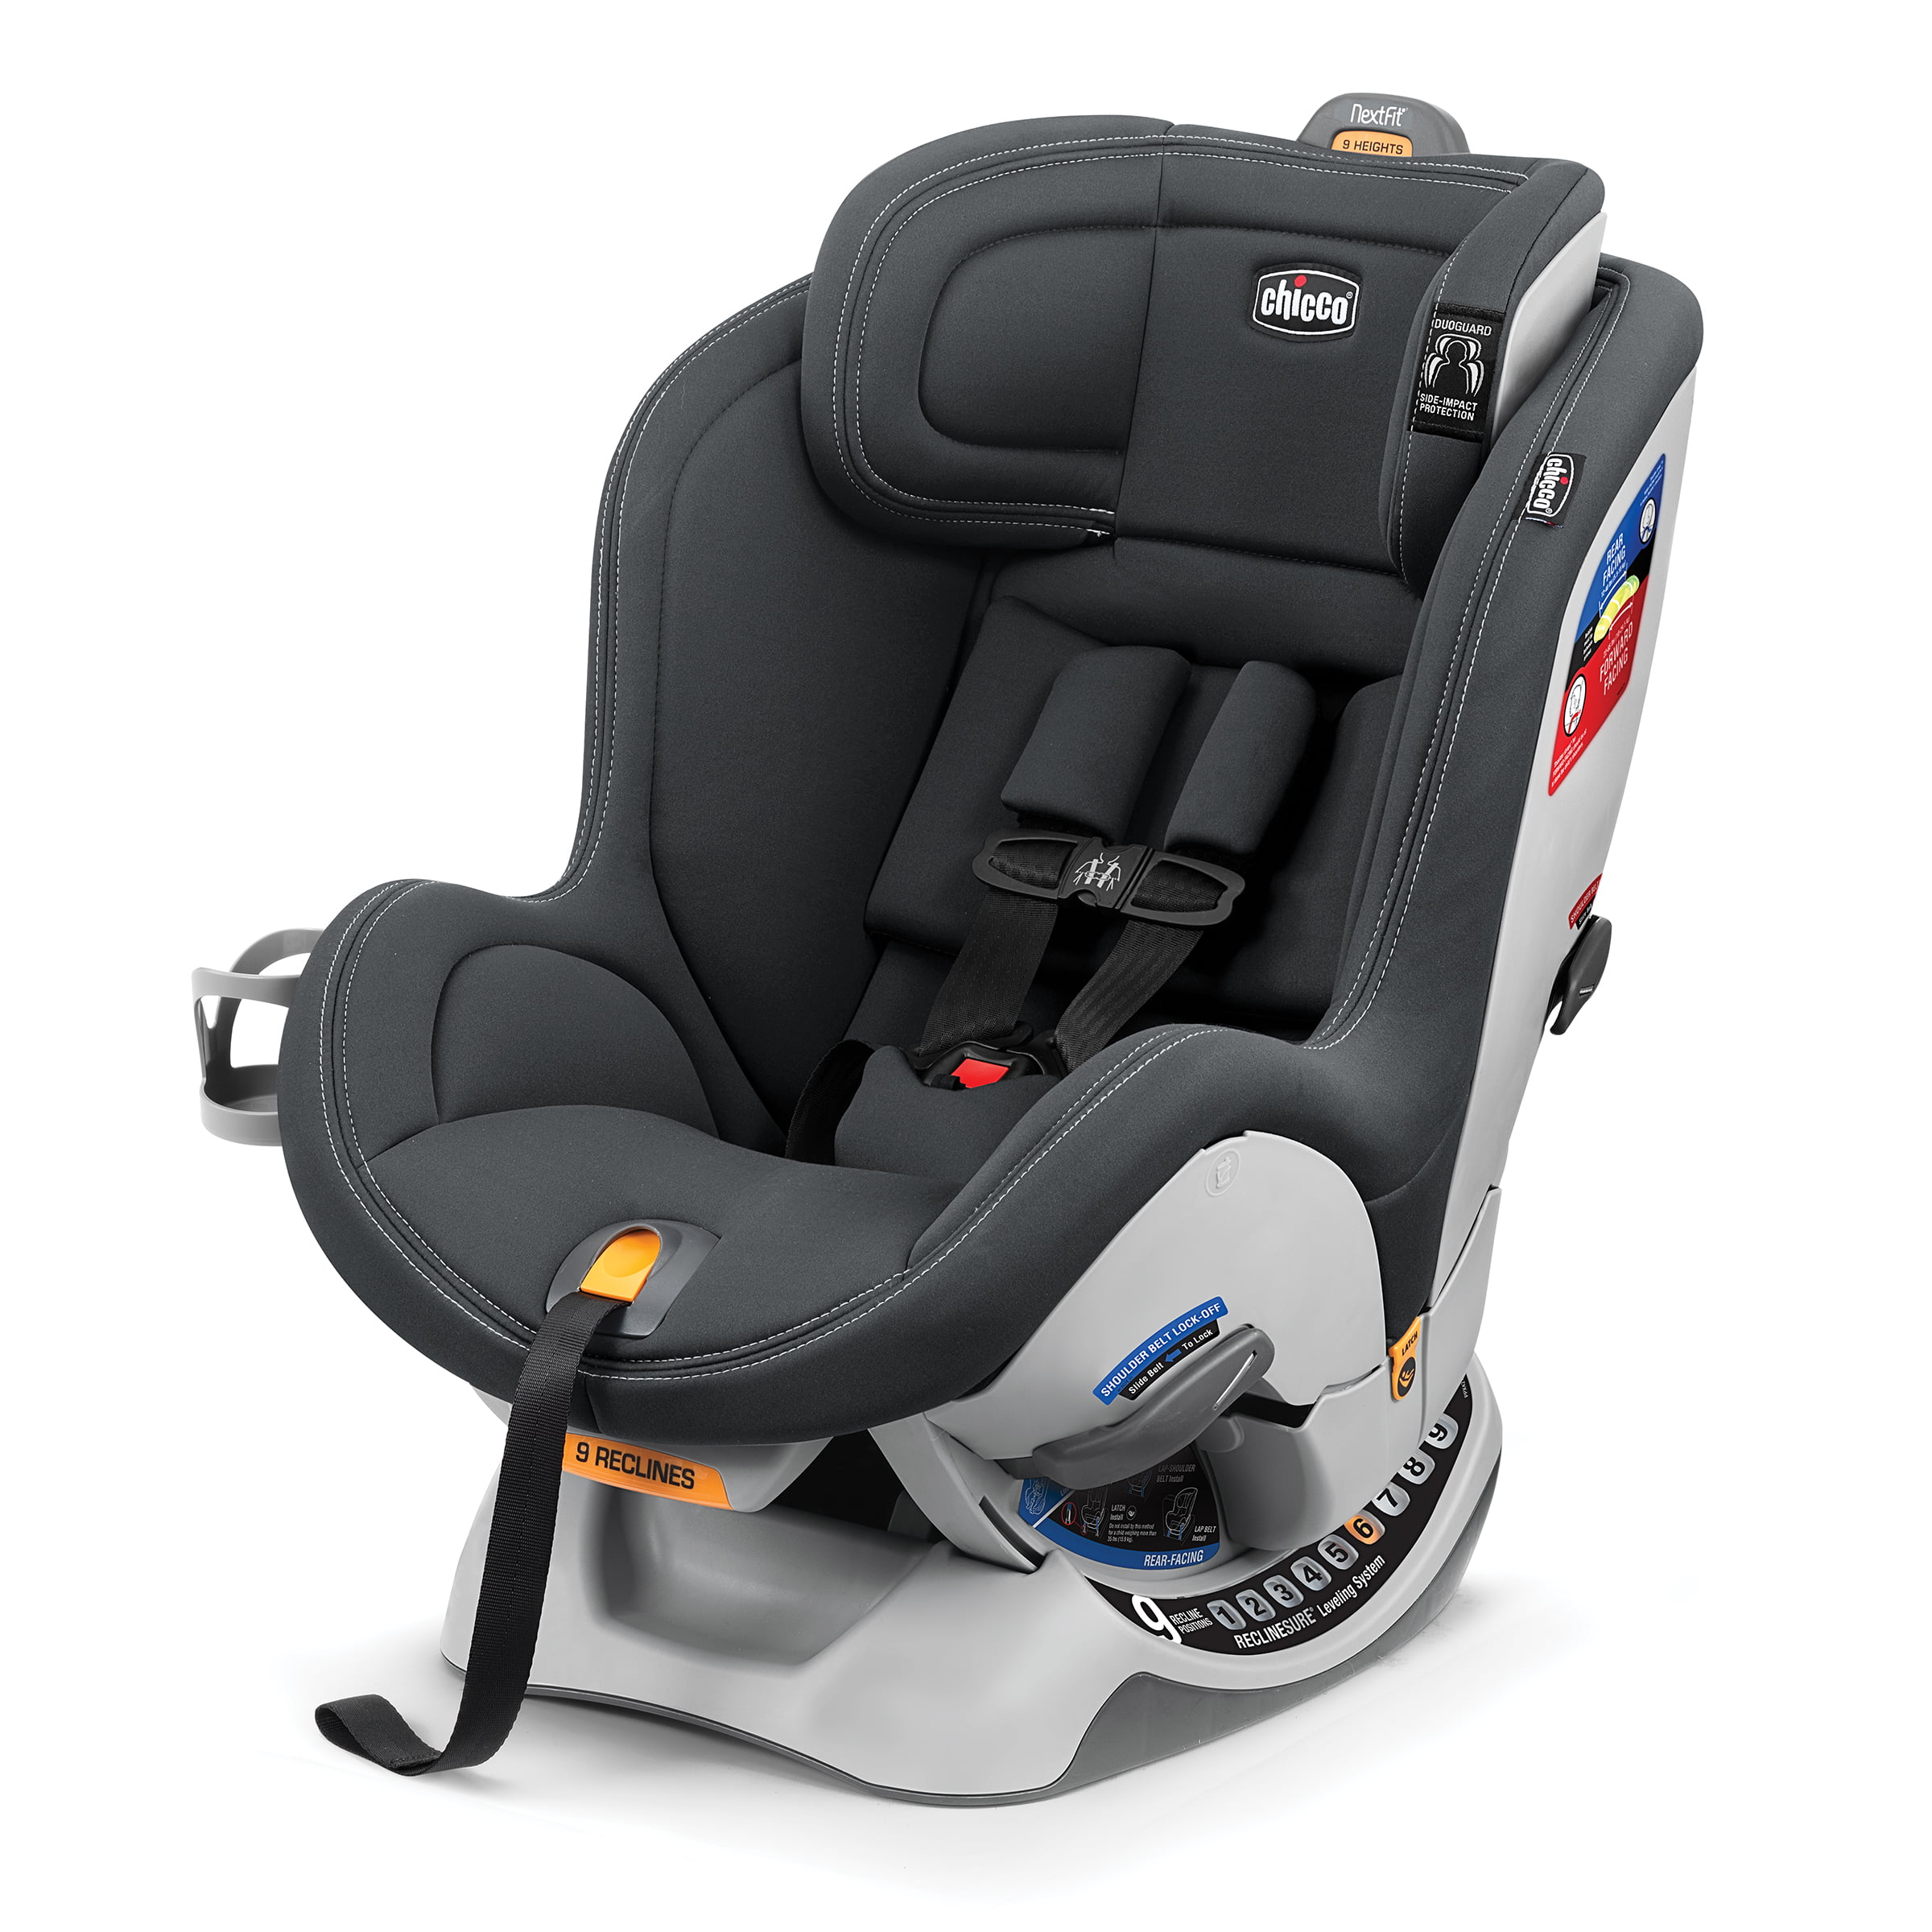 Chicco NextFit Sport Convertible Car Seat, Graphite - Walmart.com